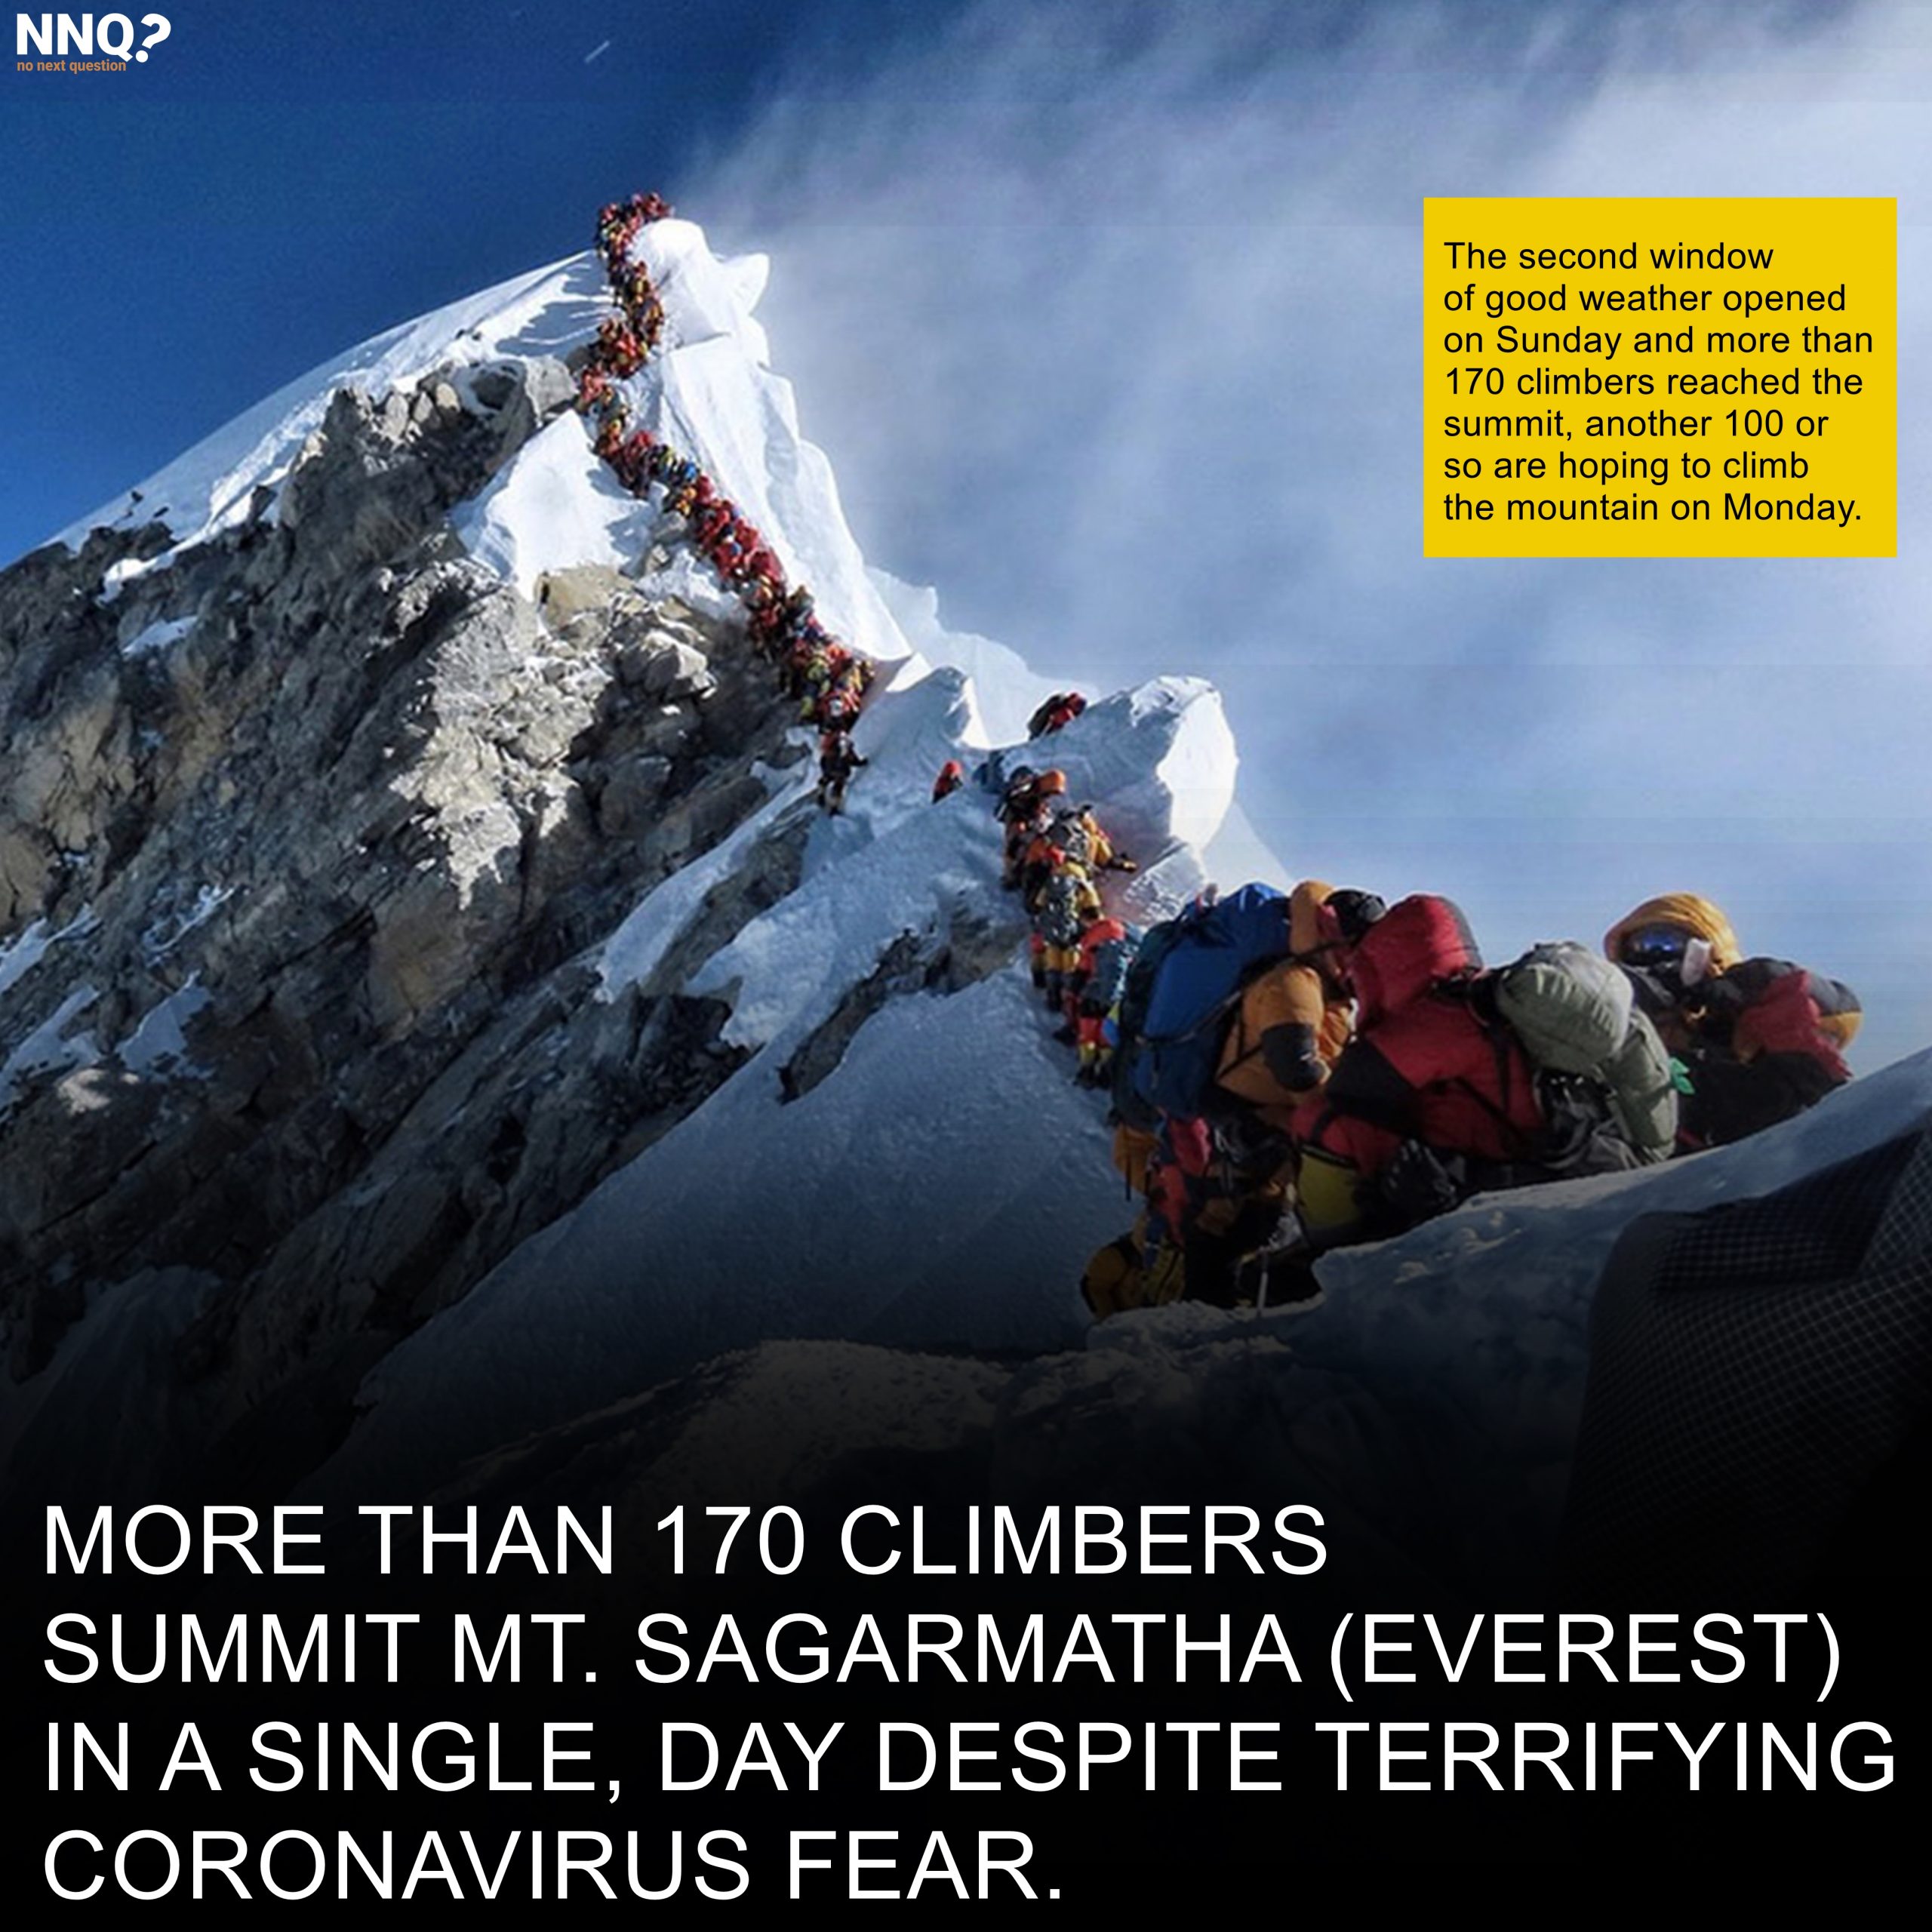 170 Climbers Summit Mt. Sagarmatha (Everest) despite Coronavirus Fear